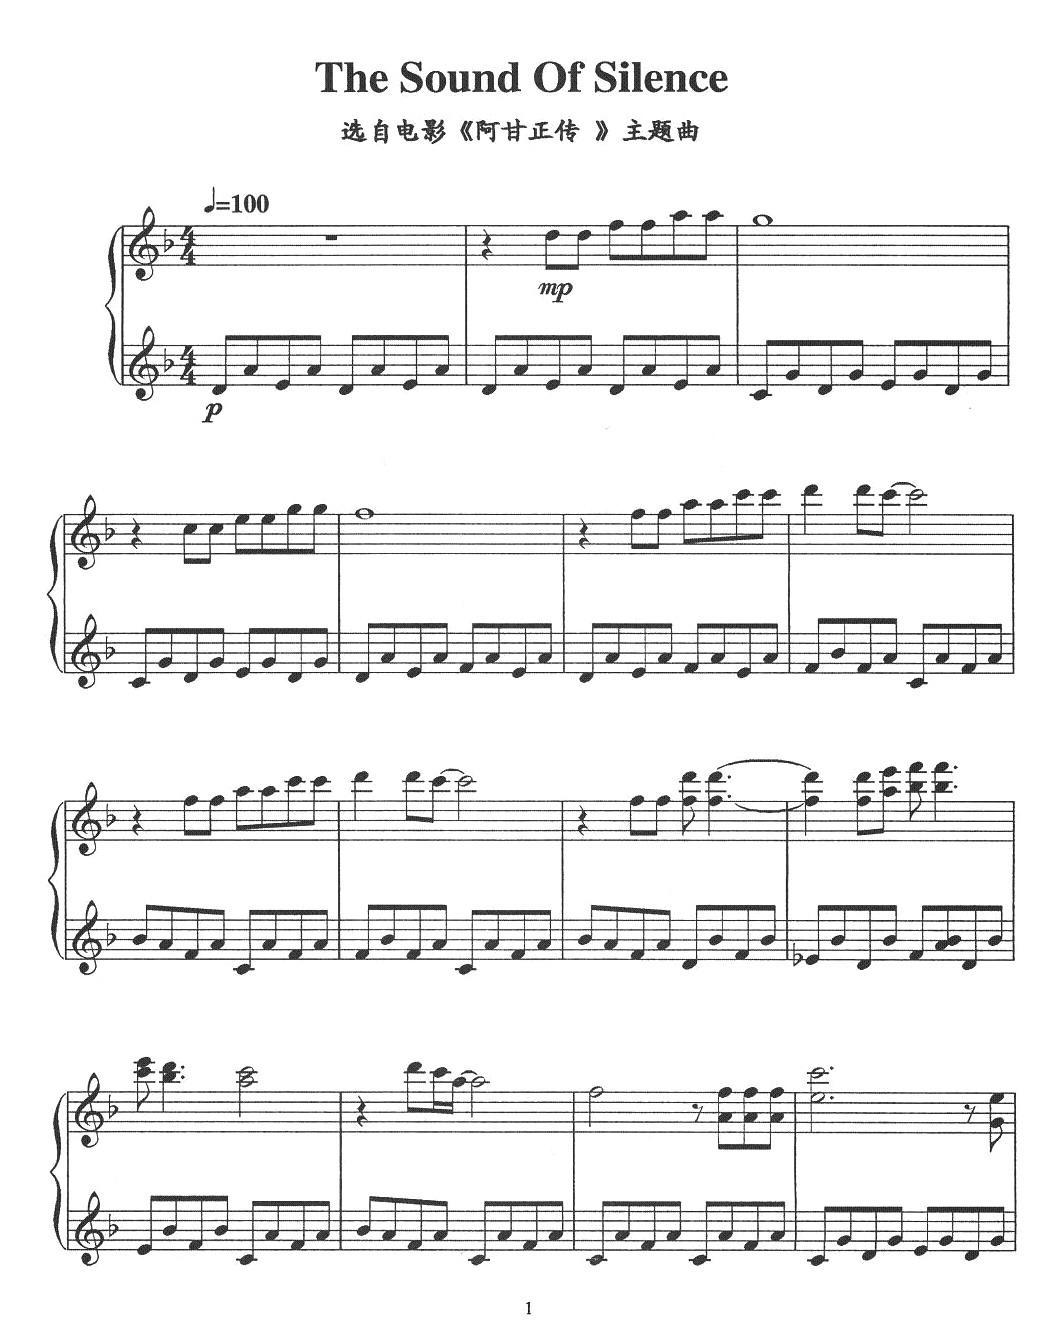 The Sound Of Silence（电影《阿甘正传》主题曲）钢琴曲谱（图1）